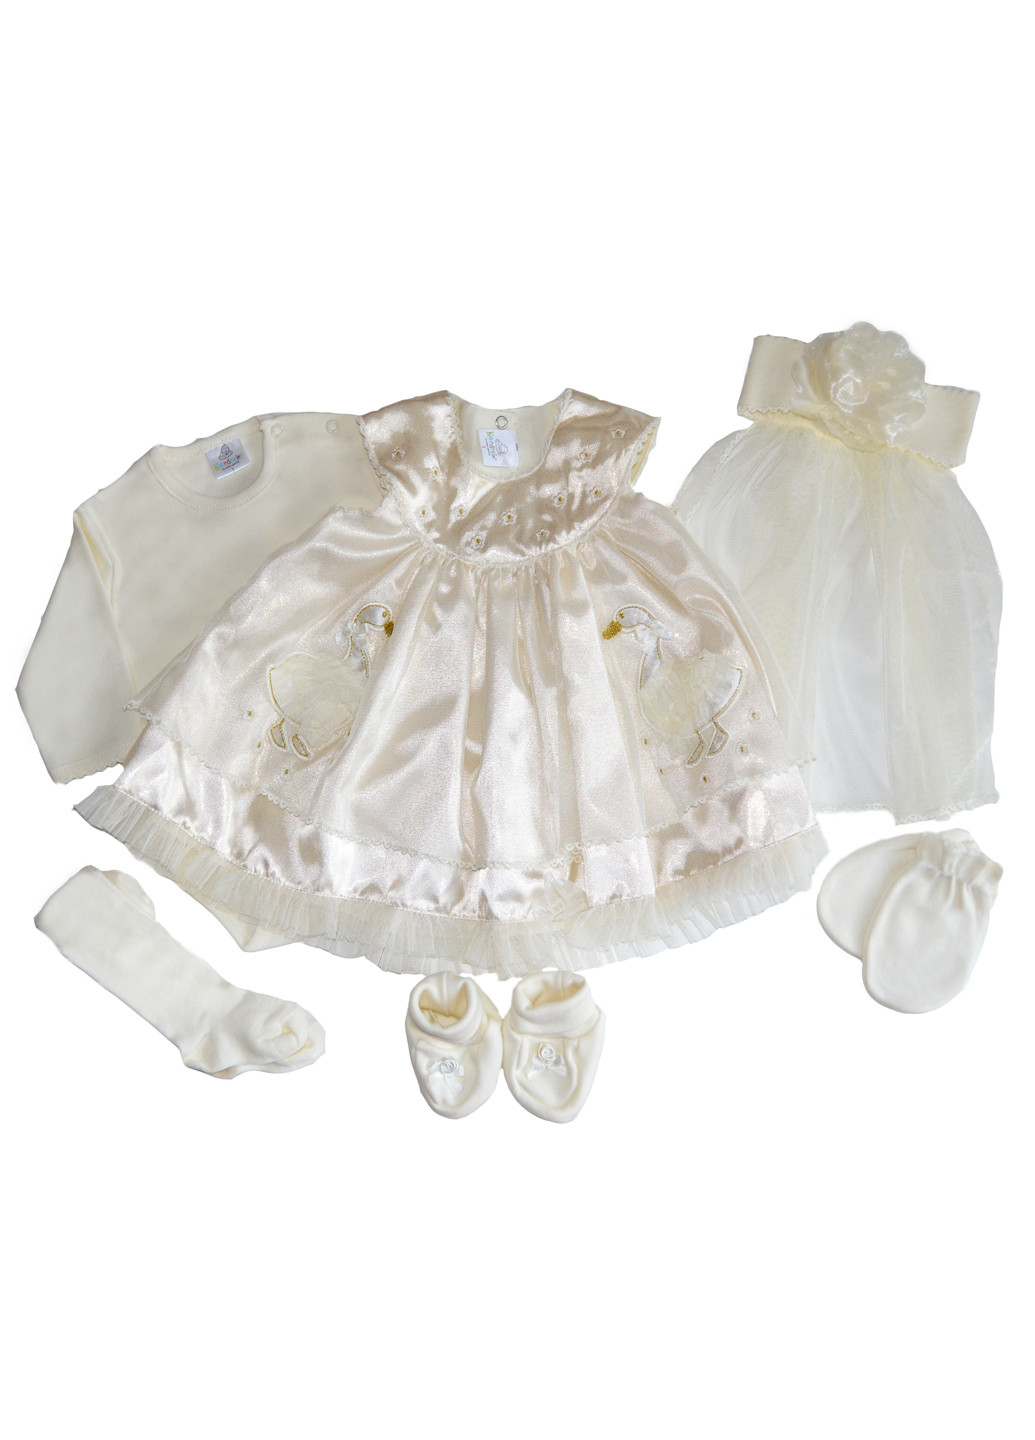 Молочный демисезонный комплект (платье, боди, колготы, царапки, пинетки, повязка-фата) Kardesler